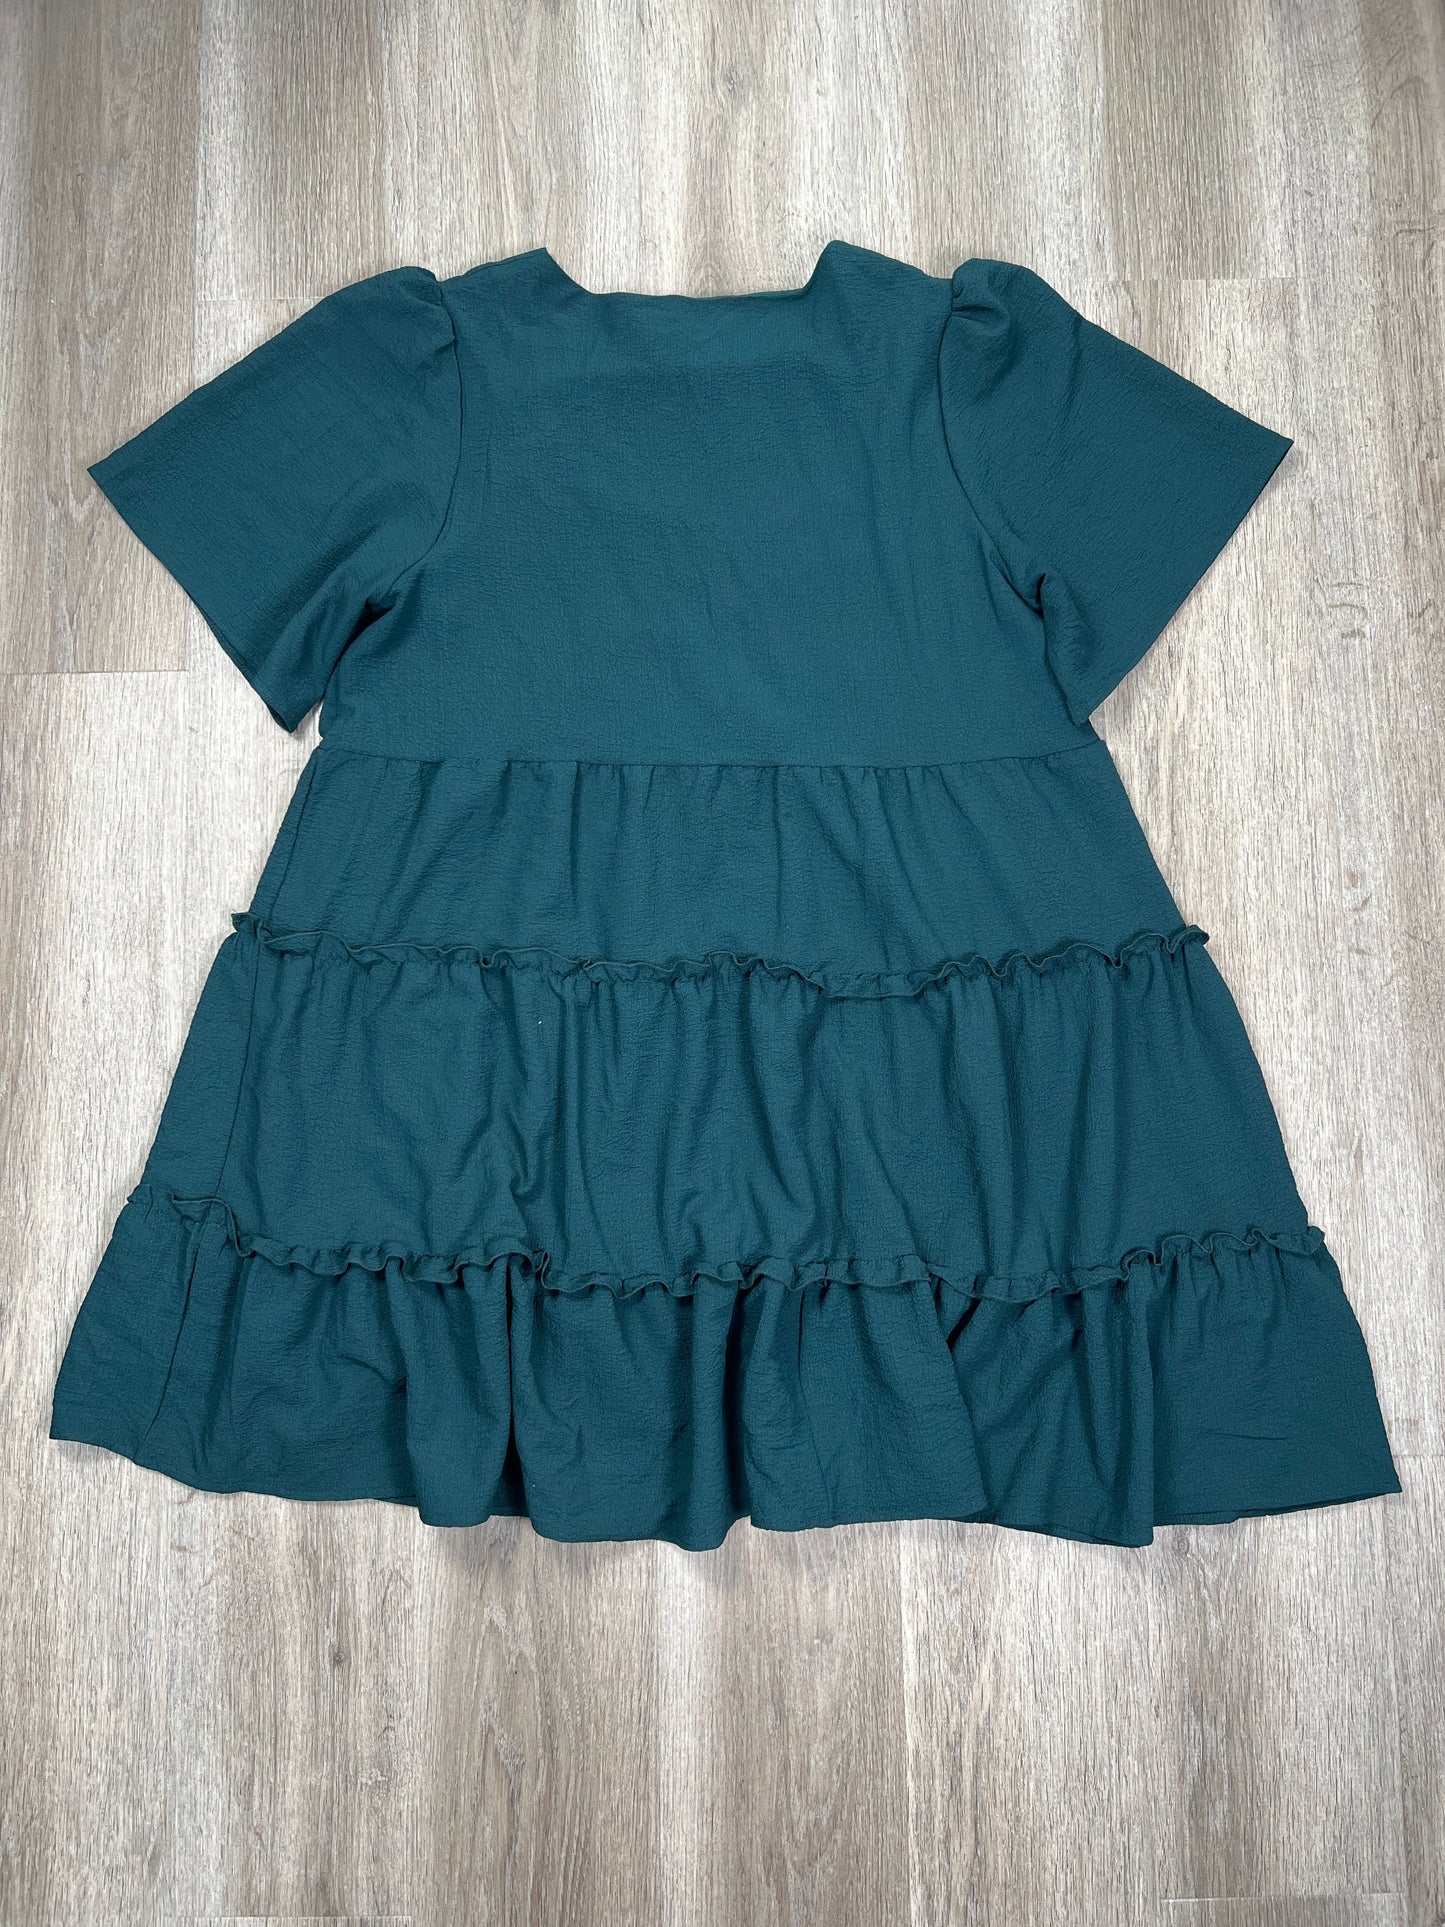 Green Dress Casual Short ARULA, Size 2x